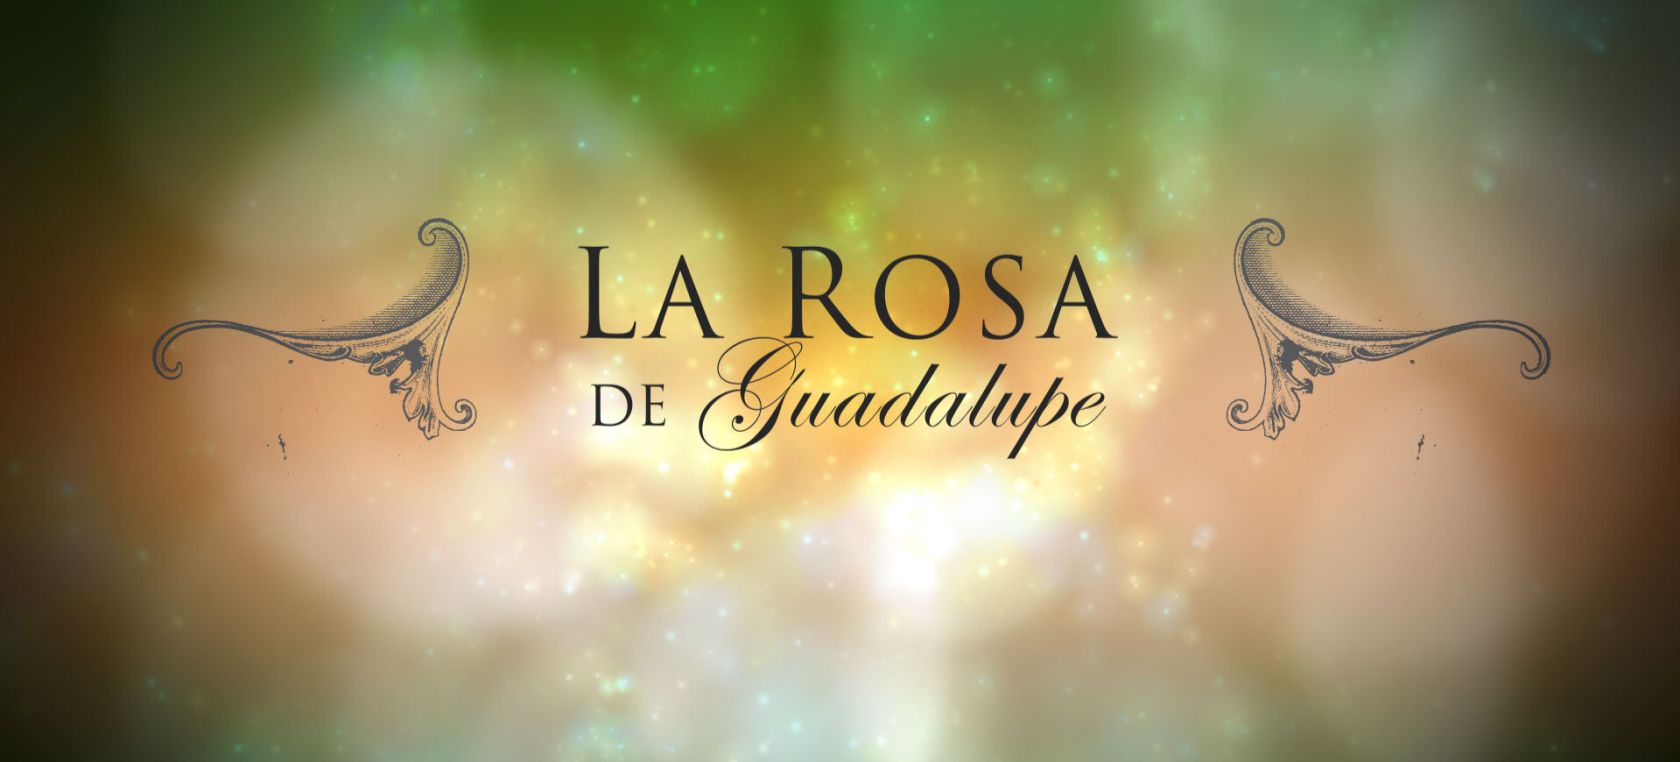 Rosa de Guadalupe exhibe al gobierno mexicano: revelan censura